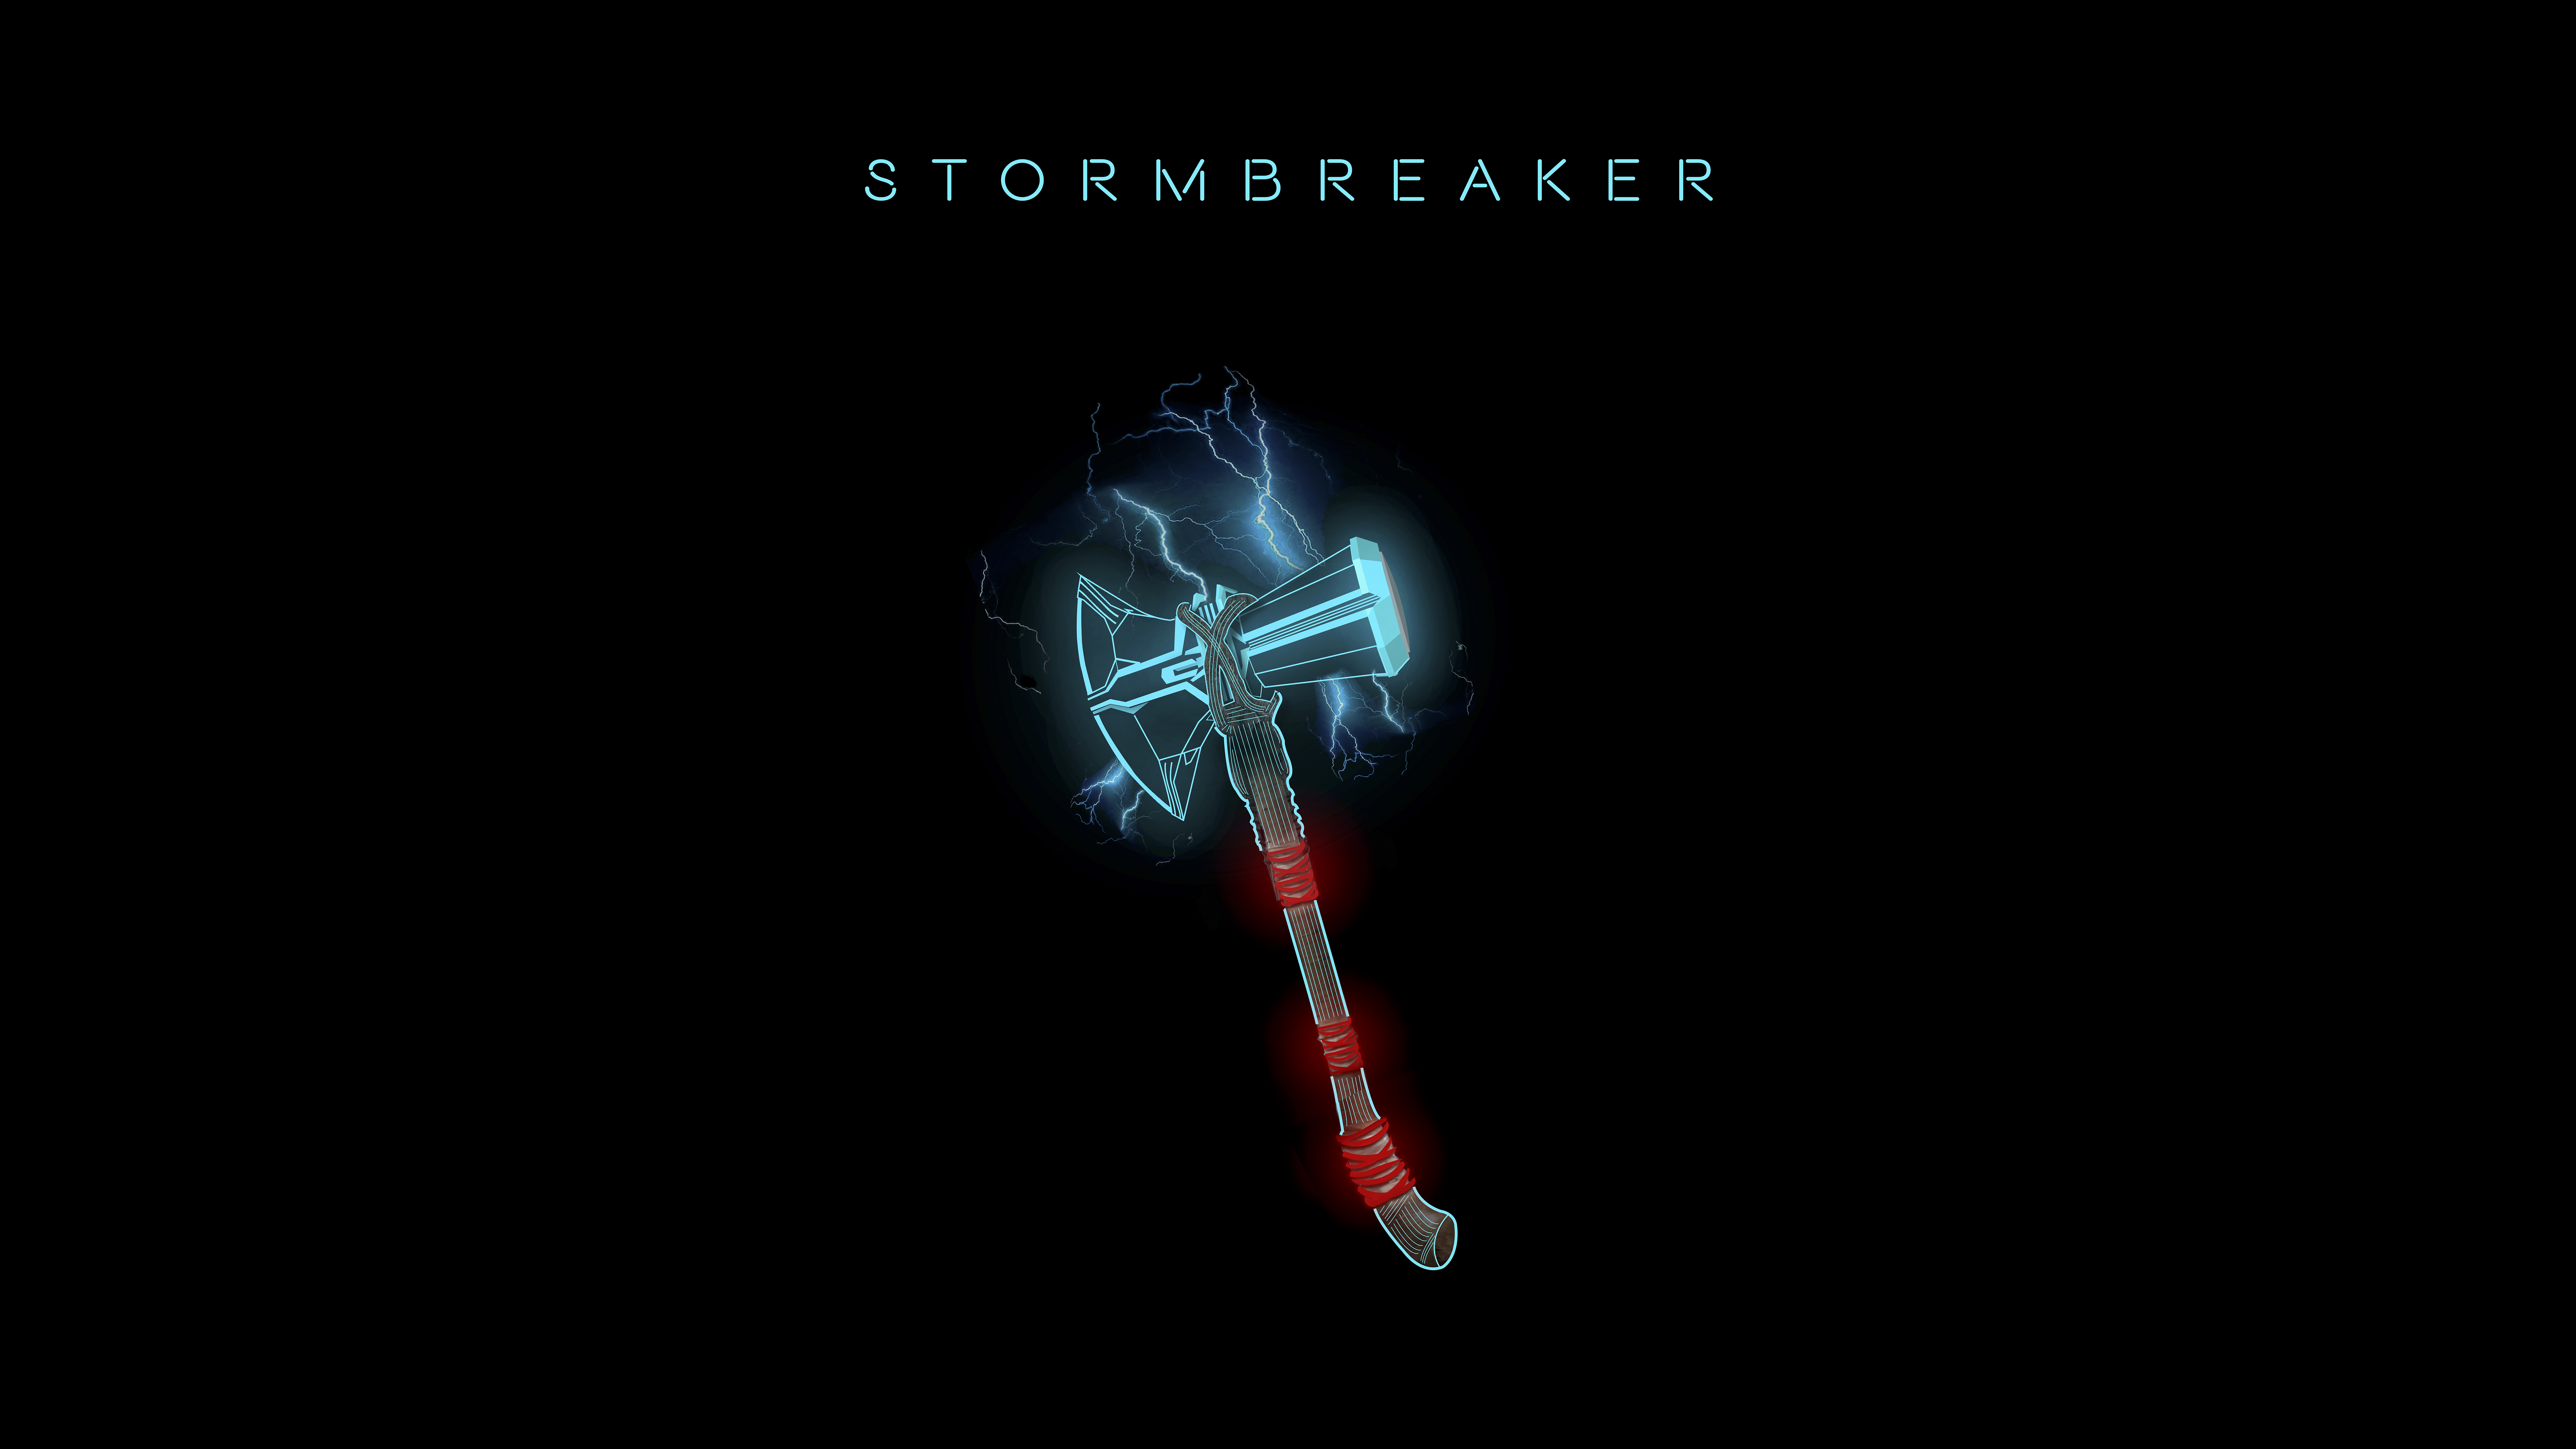 Descarga gratuita de fondo de pantalla para móvil de Historietas, Rompetormentas (Marvel Comics), Alex Rider: Operación Stormbreaker.